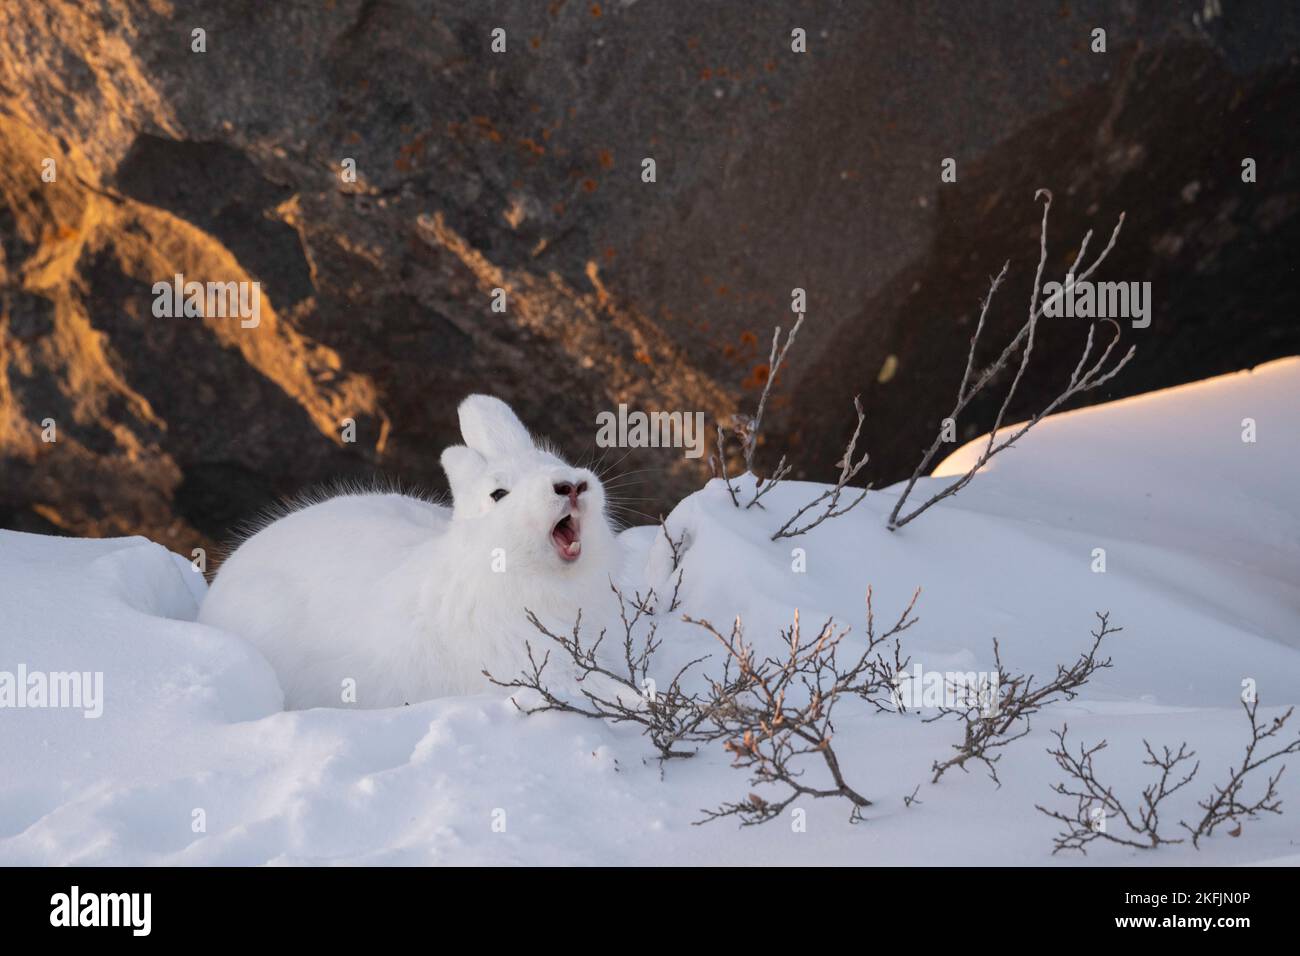 Arctic hare in snow Stock Photo